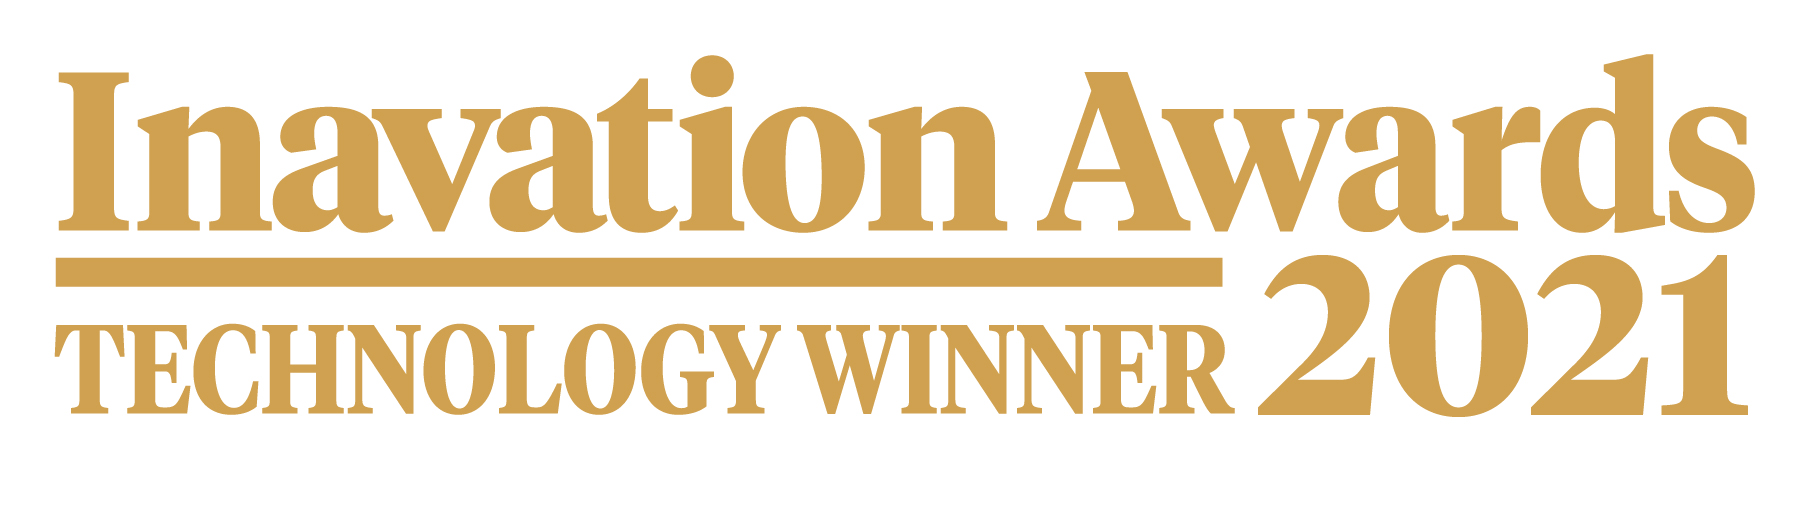 Inavation 2021 Technology Winner Award